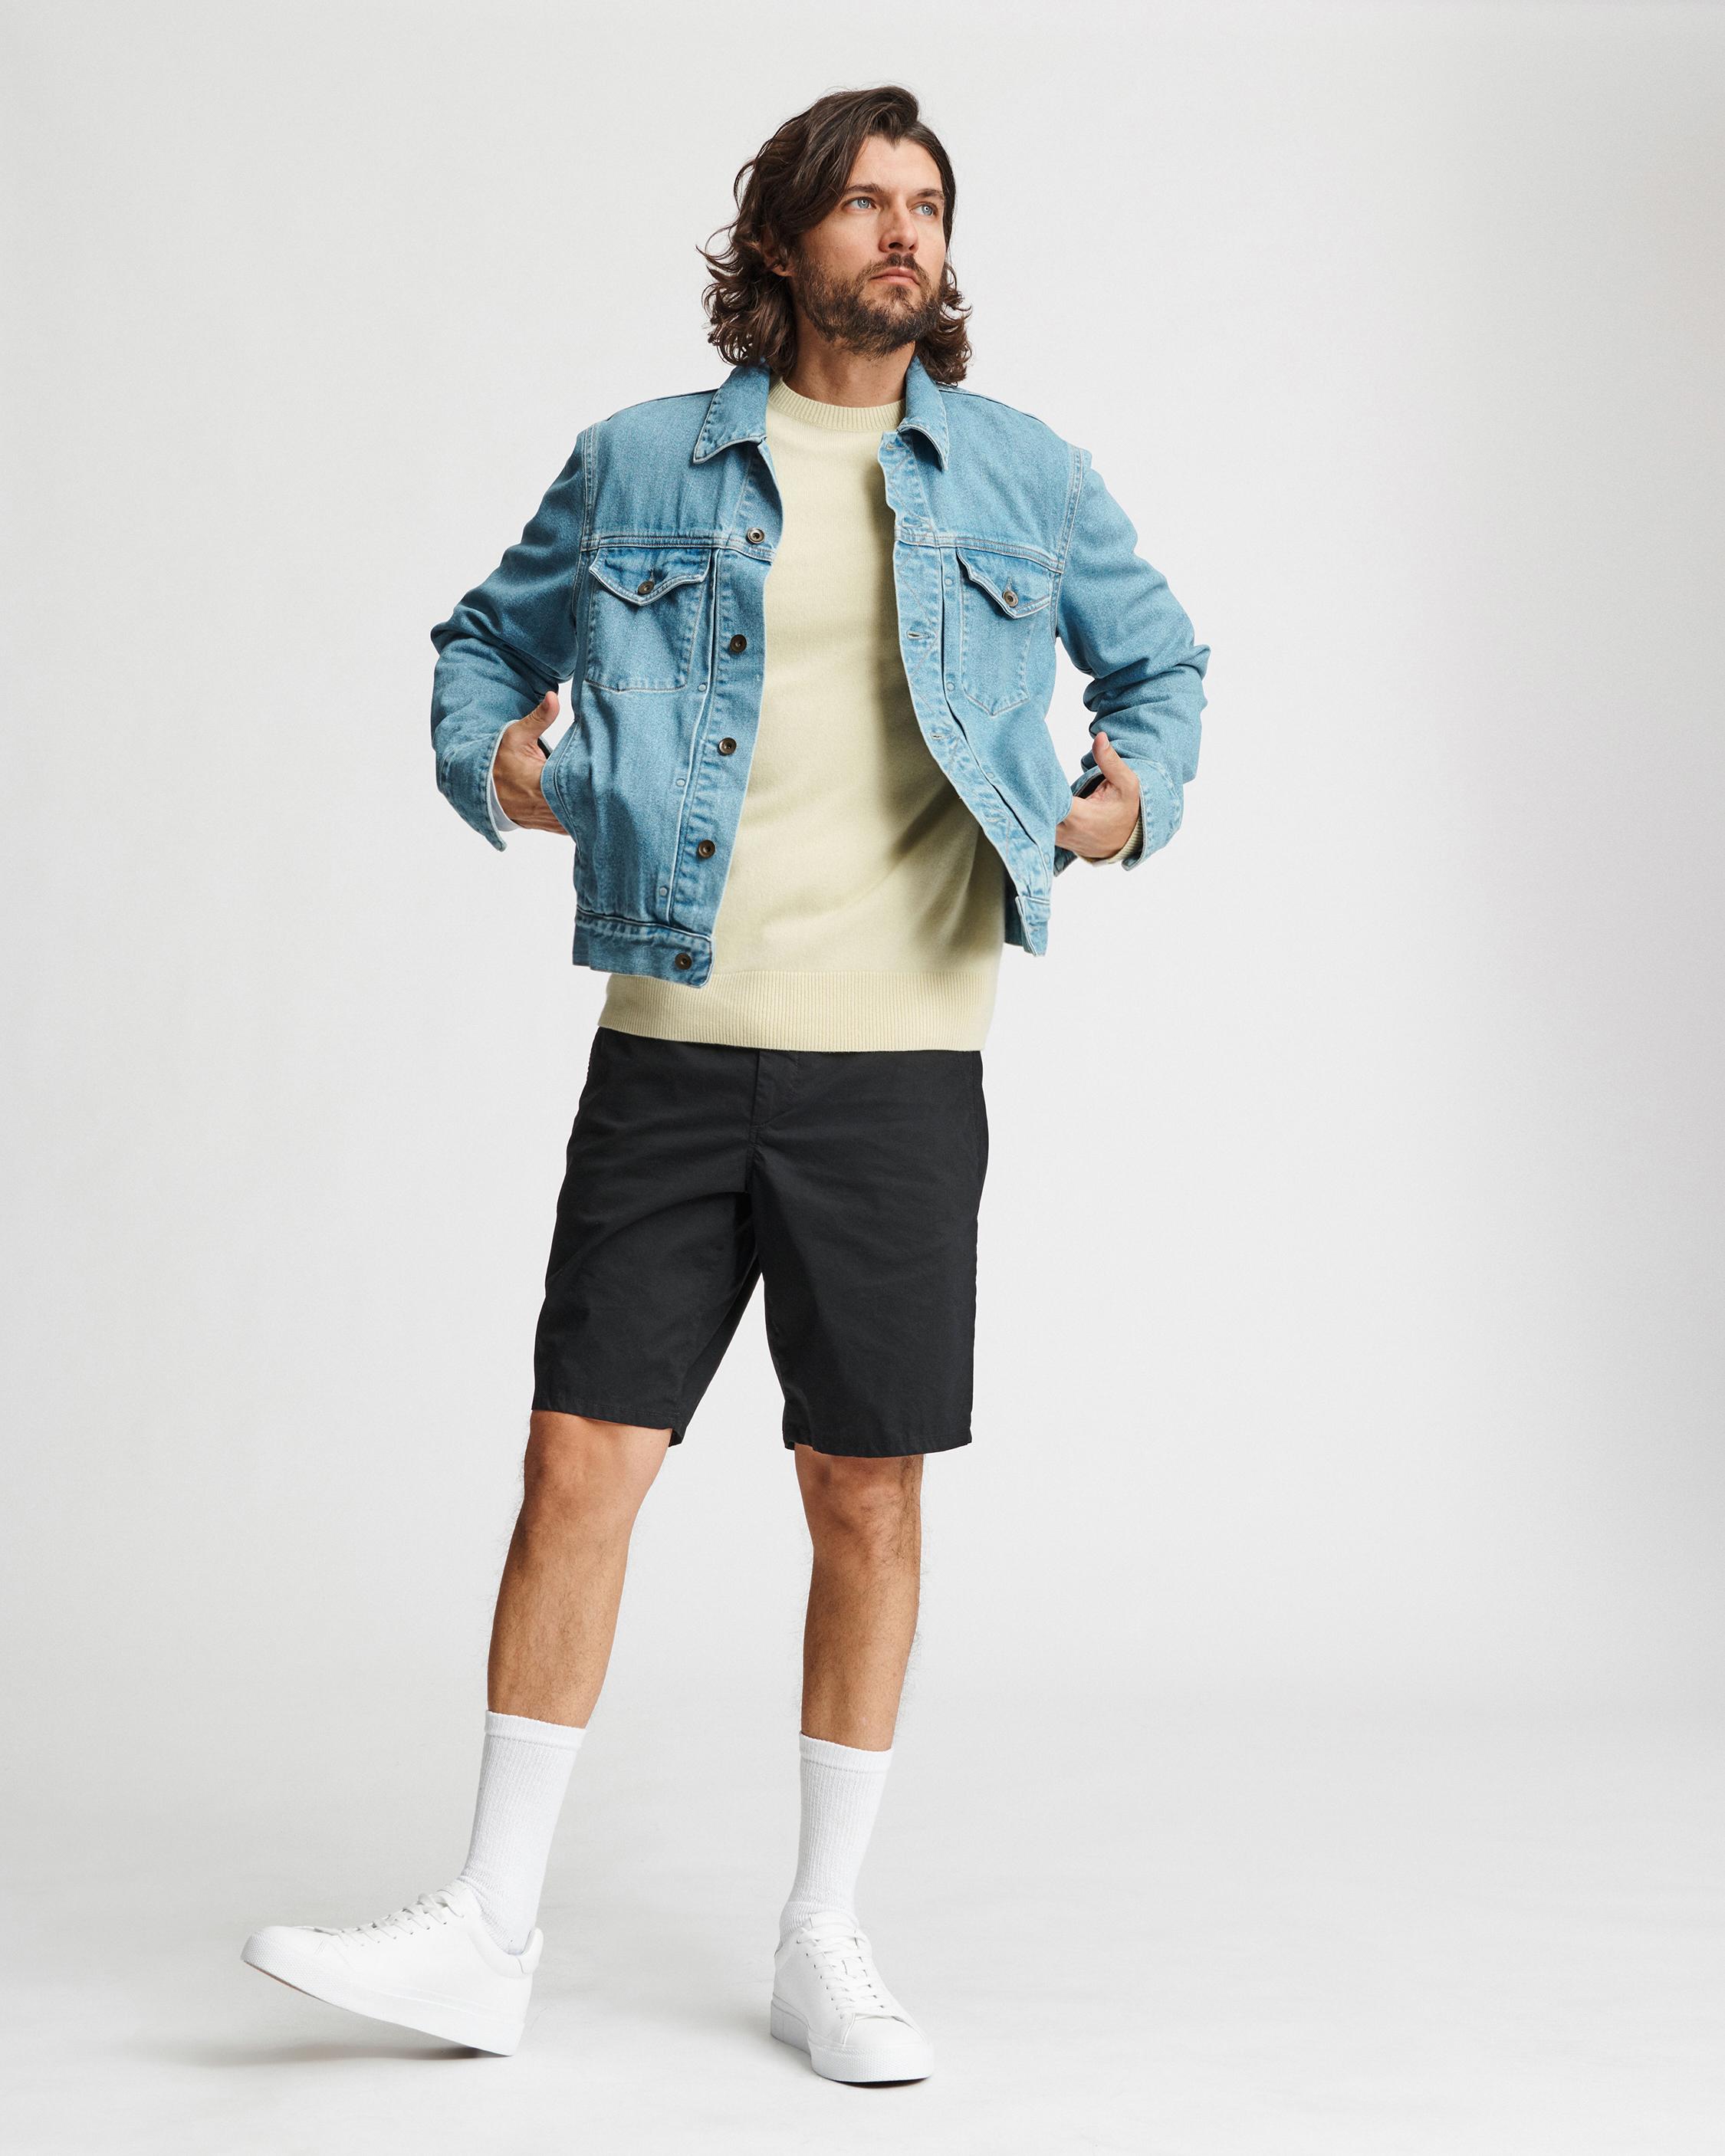 jean jacket and shorts